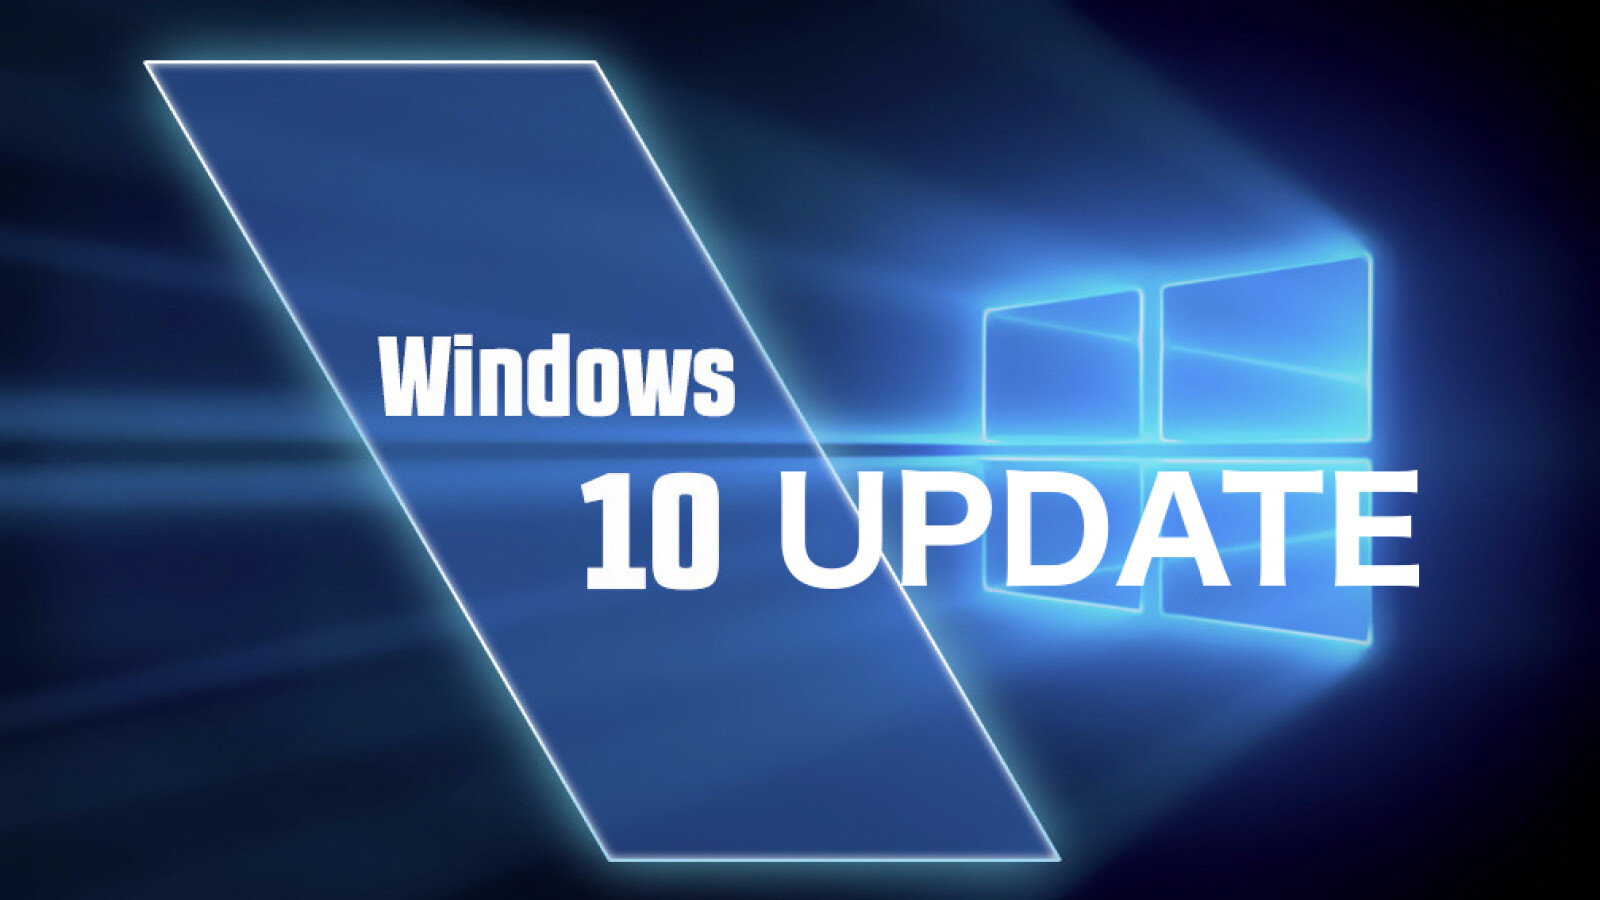 Windows 10 Anniversary Update: Release-Termin offiziell bestätigt - NETZWELT1600 x 900